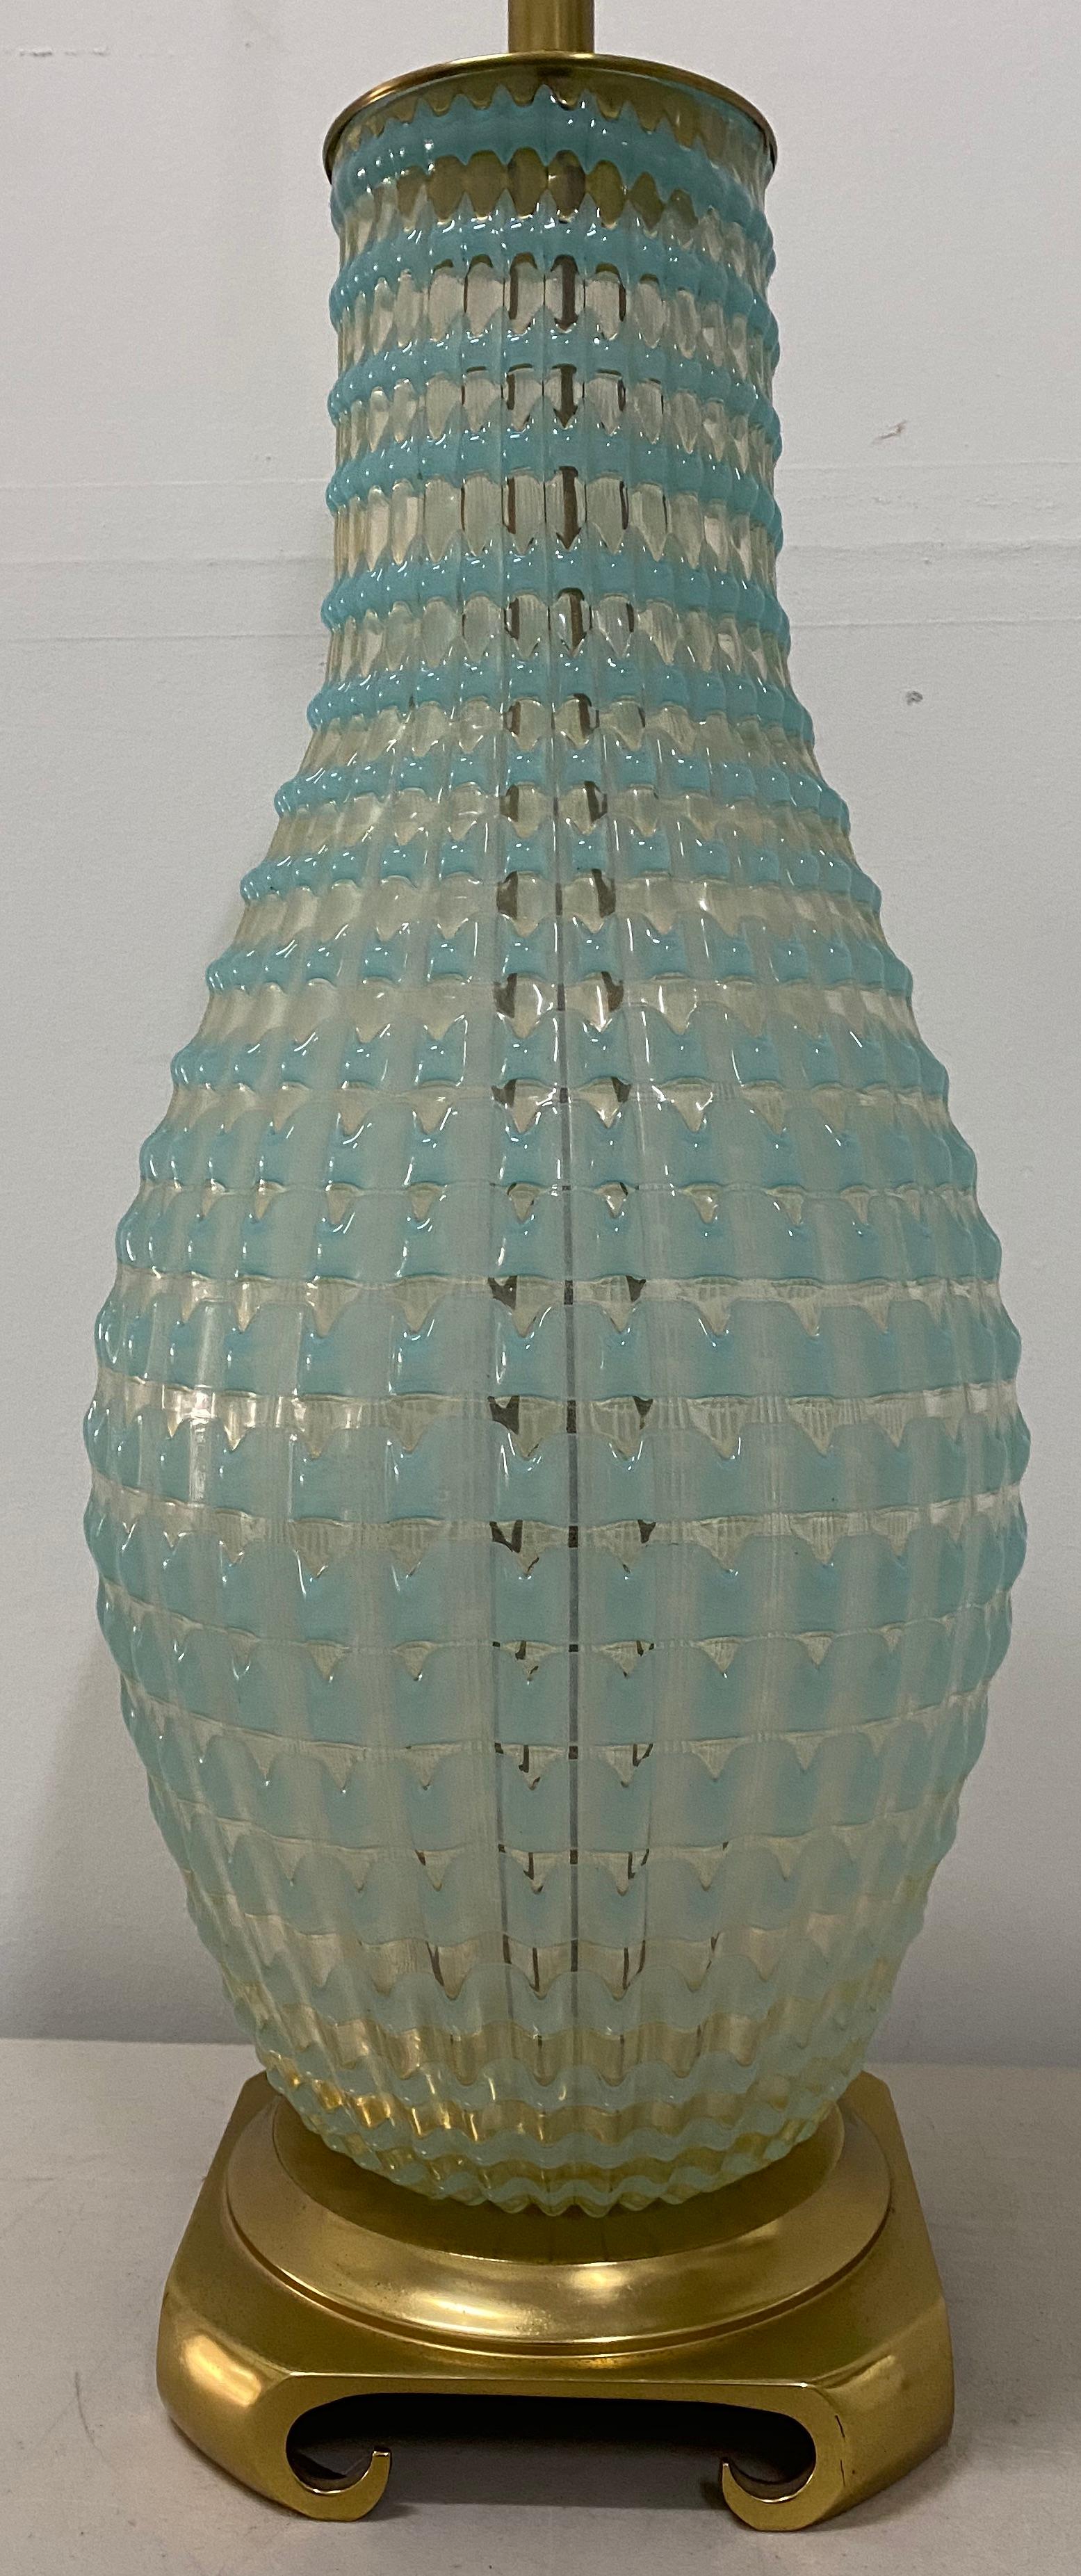 Gorgeous mid-20th century Murano aqua blue glass lamp, circa 1960

Solid brass base

Dimensions 8